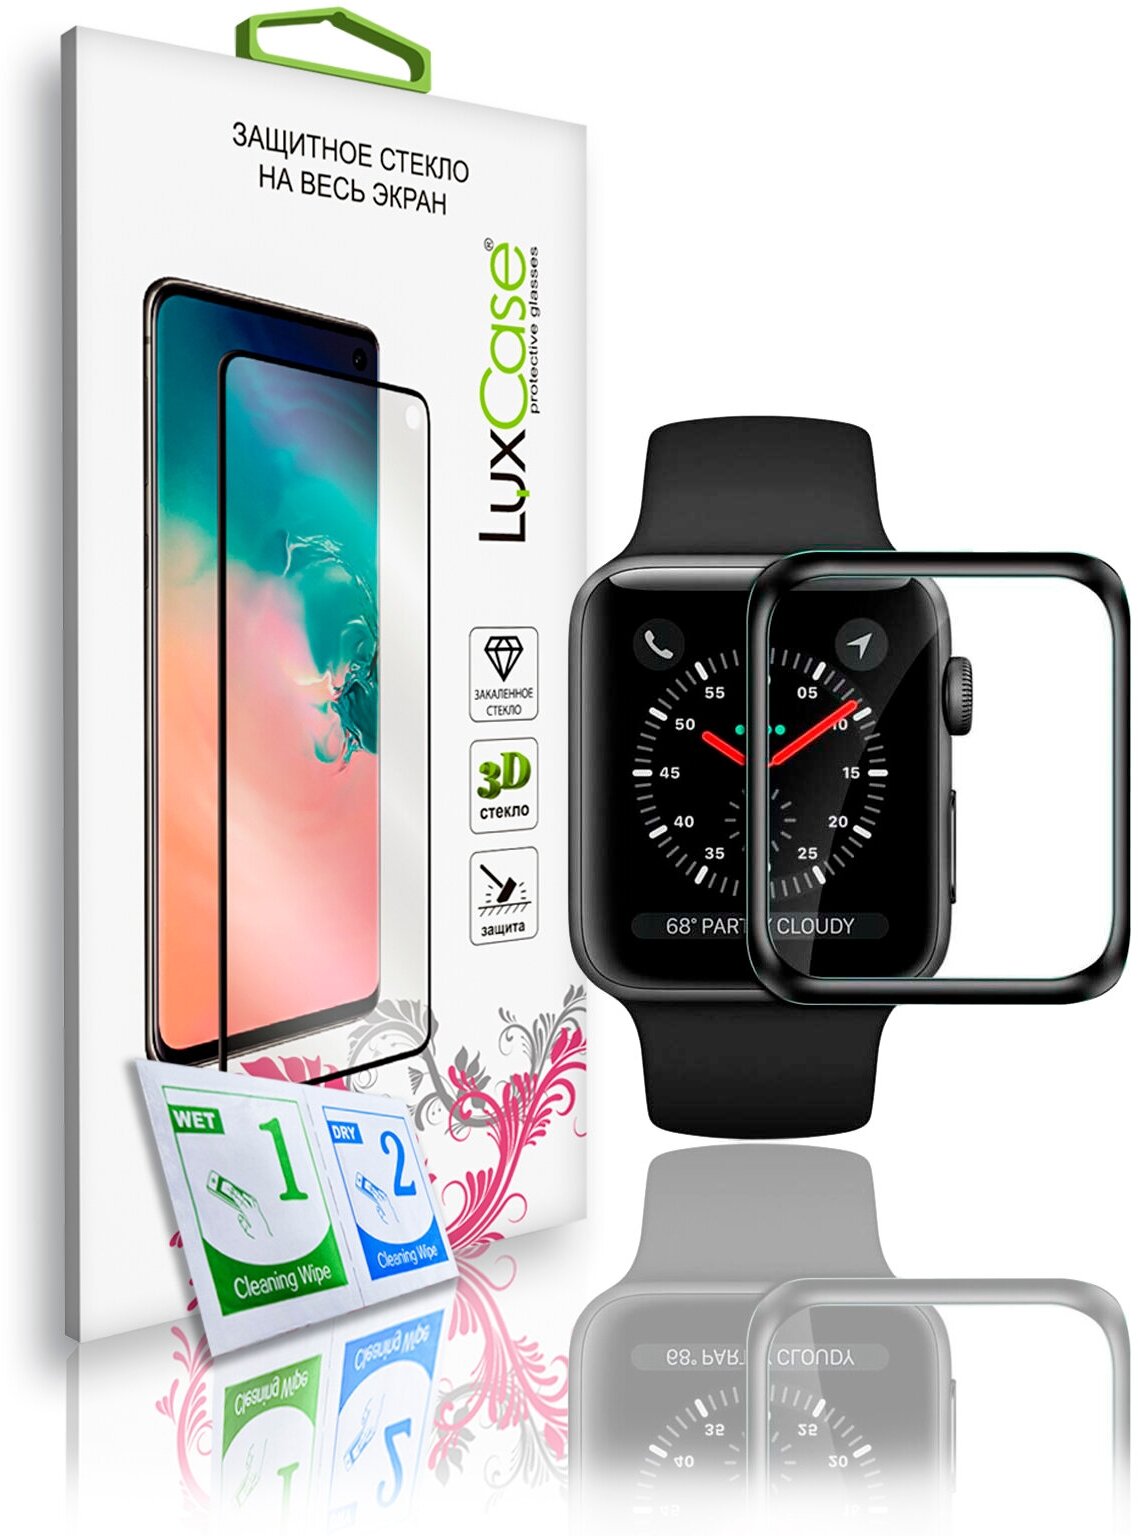 Защитное стекло Apple Watch Series 4 / 6 / SE 44 mm / на Эппл Вотч 4 / 6 / СЕ 44 мм / На весь экран / Полноклеевое Черная рамка 0,33 мм